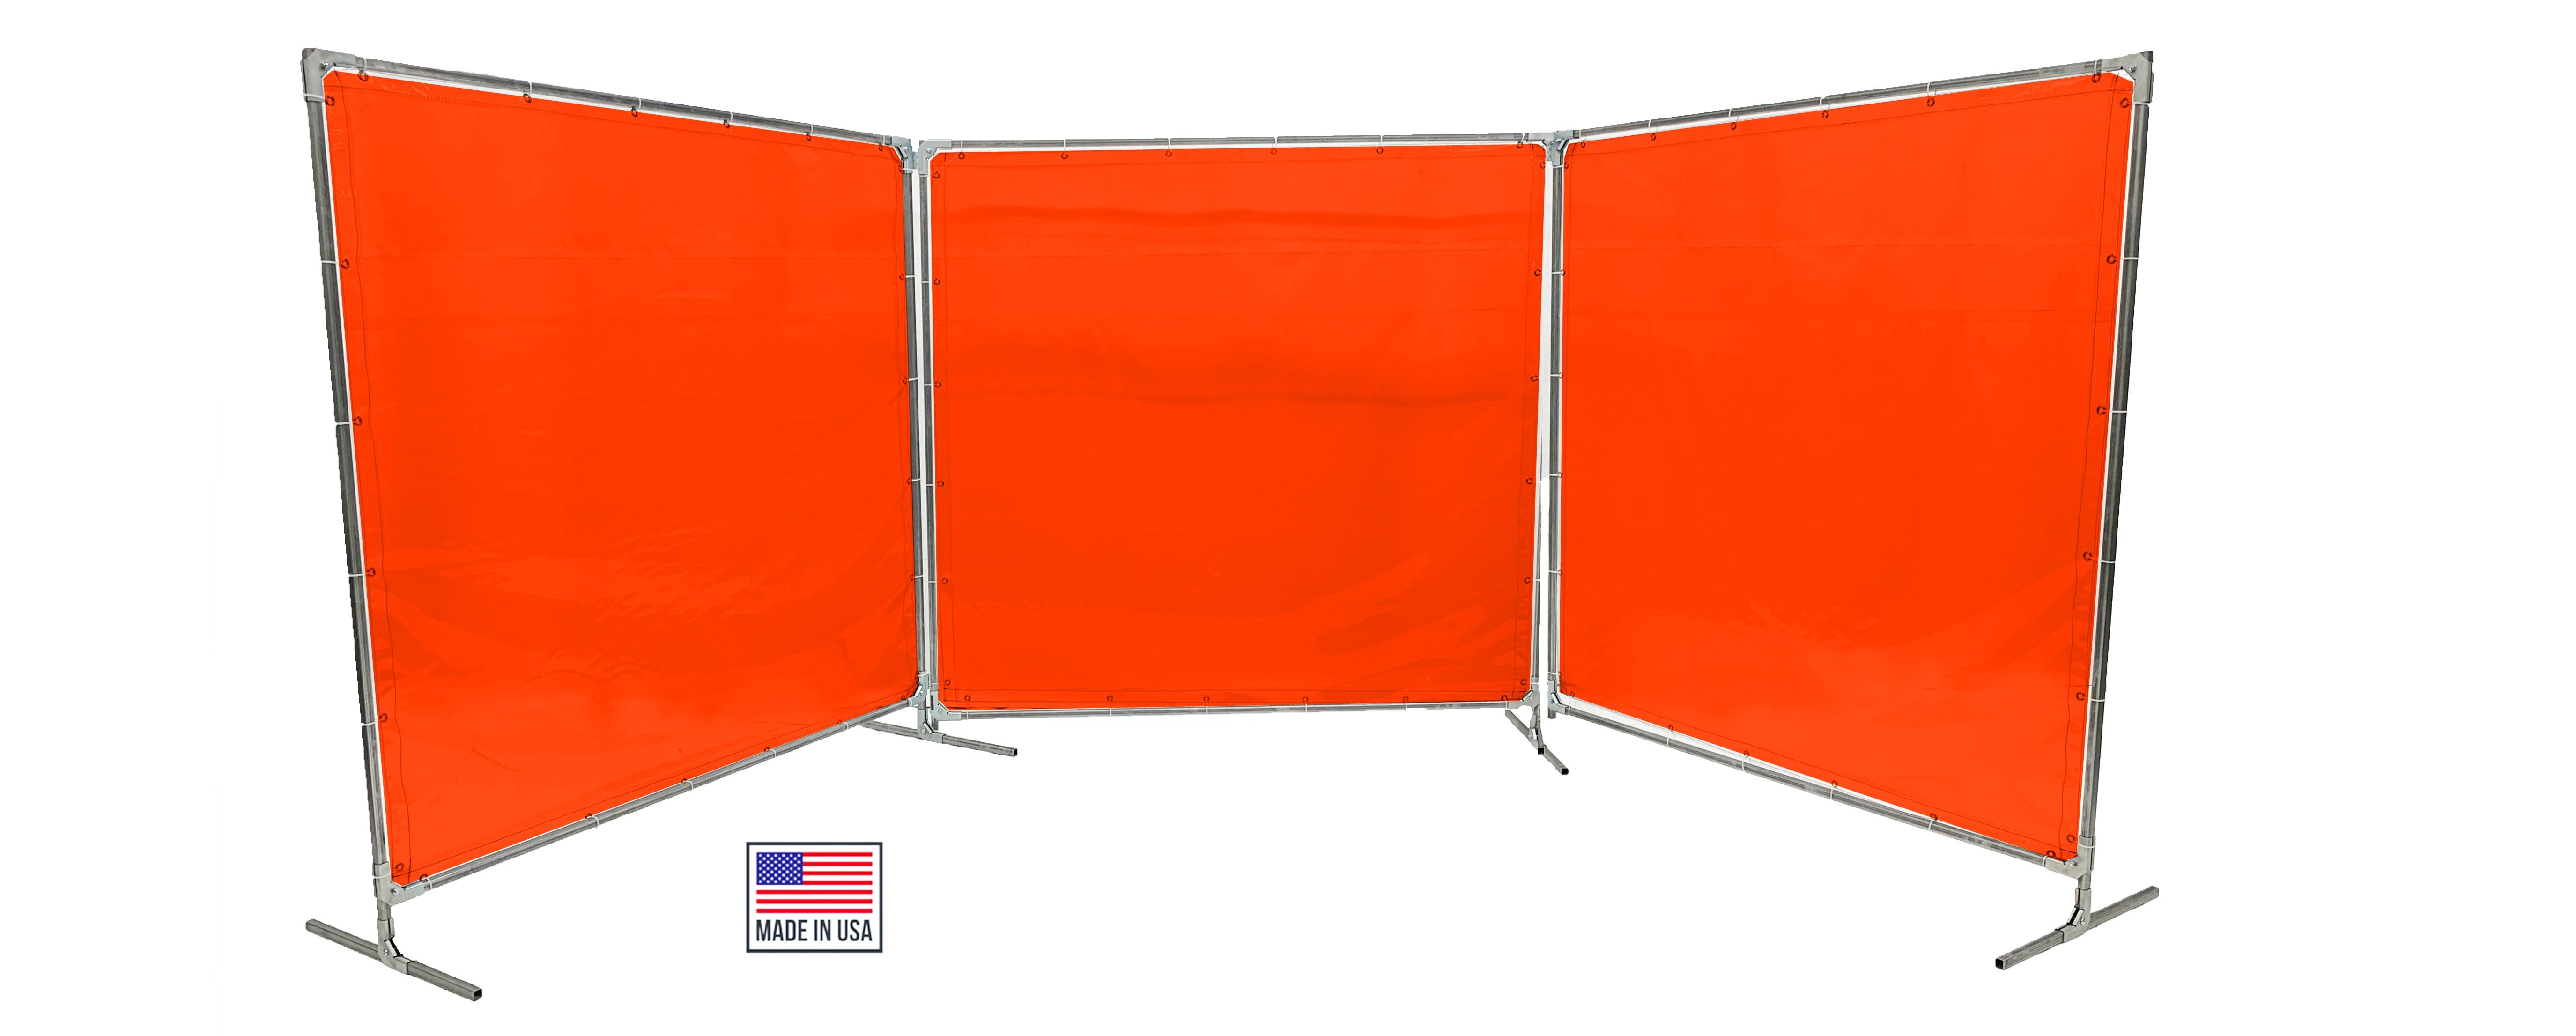 Welding Screens & Frame 2-3-4 Panels, Transparent 14 Mil Orange-Red, See-Thru Weld Screens